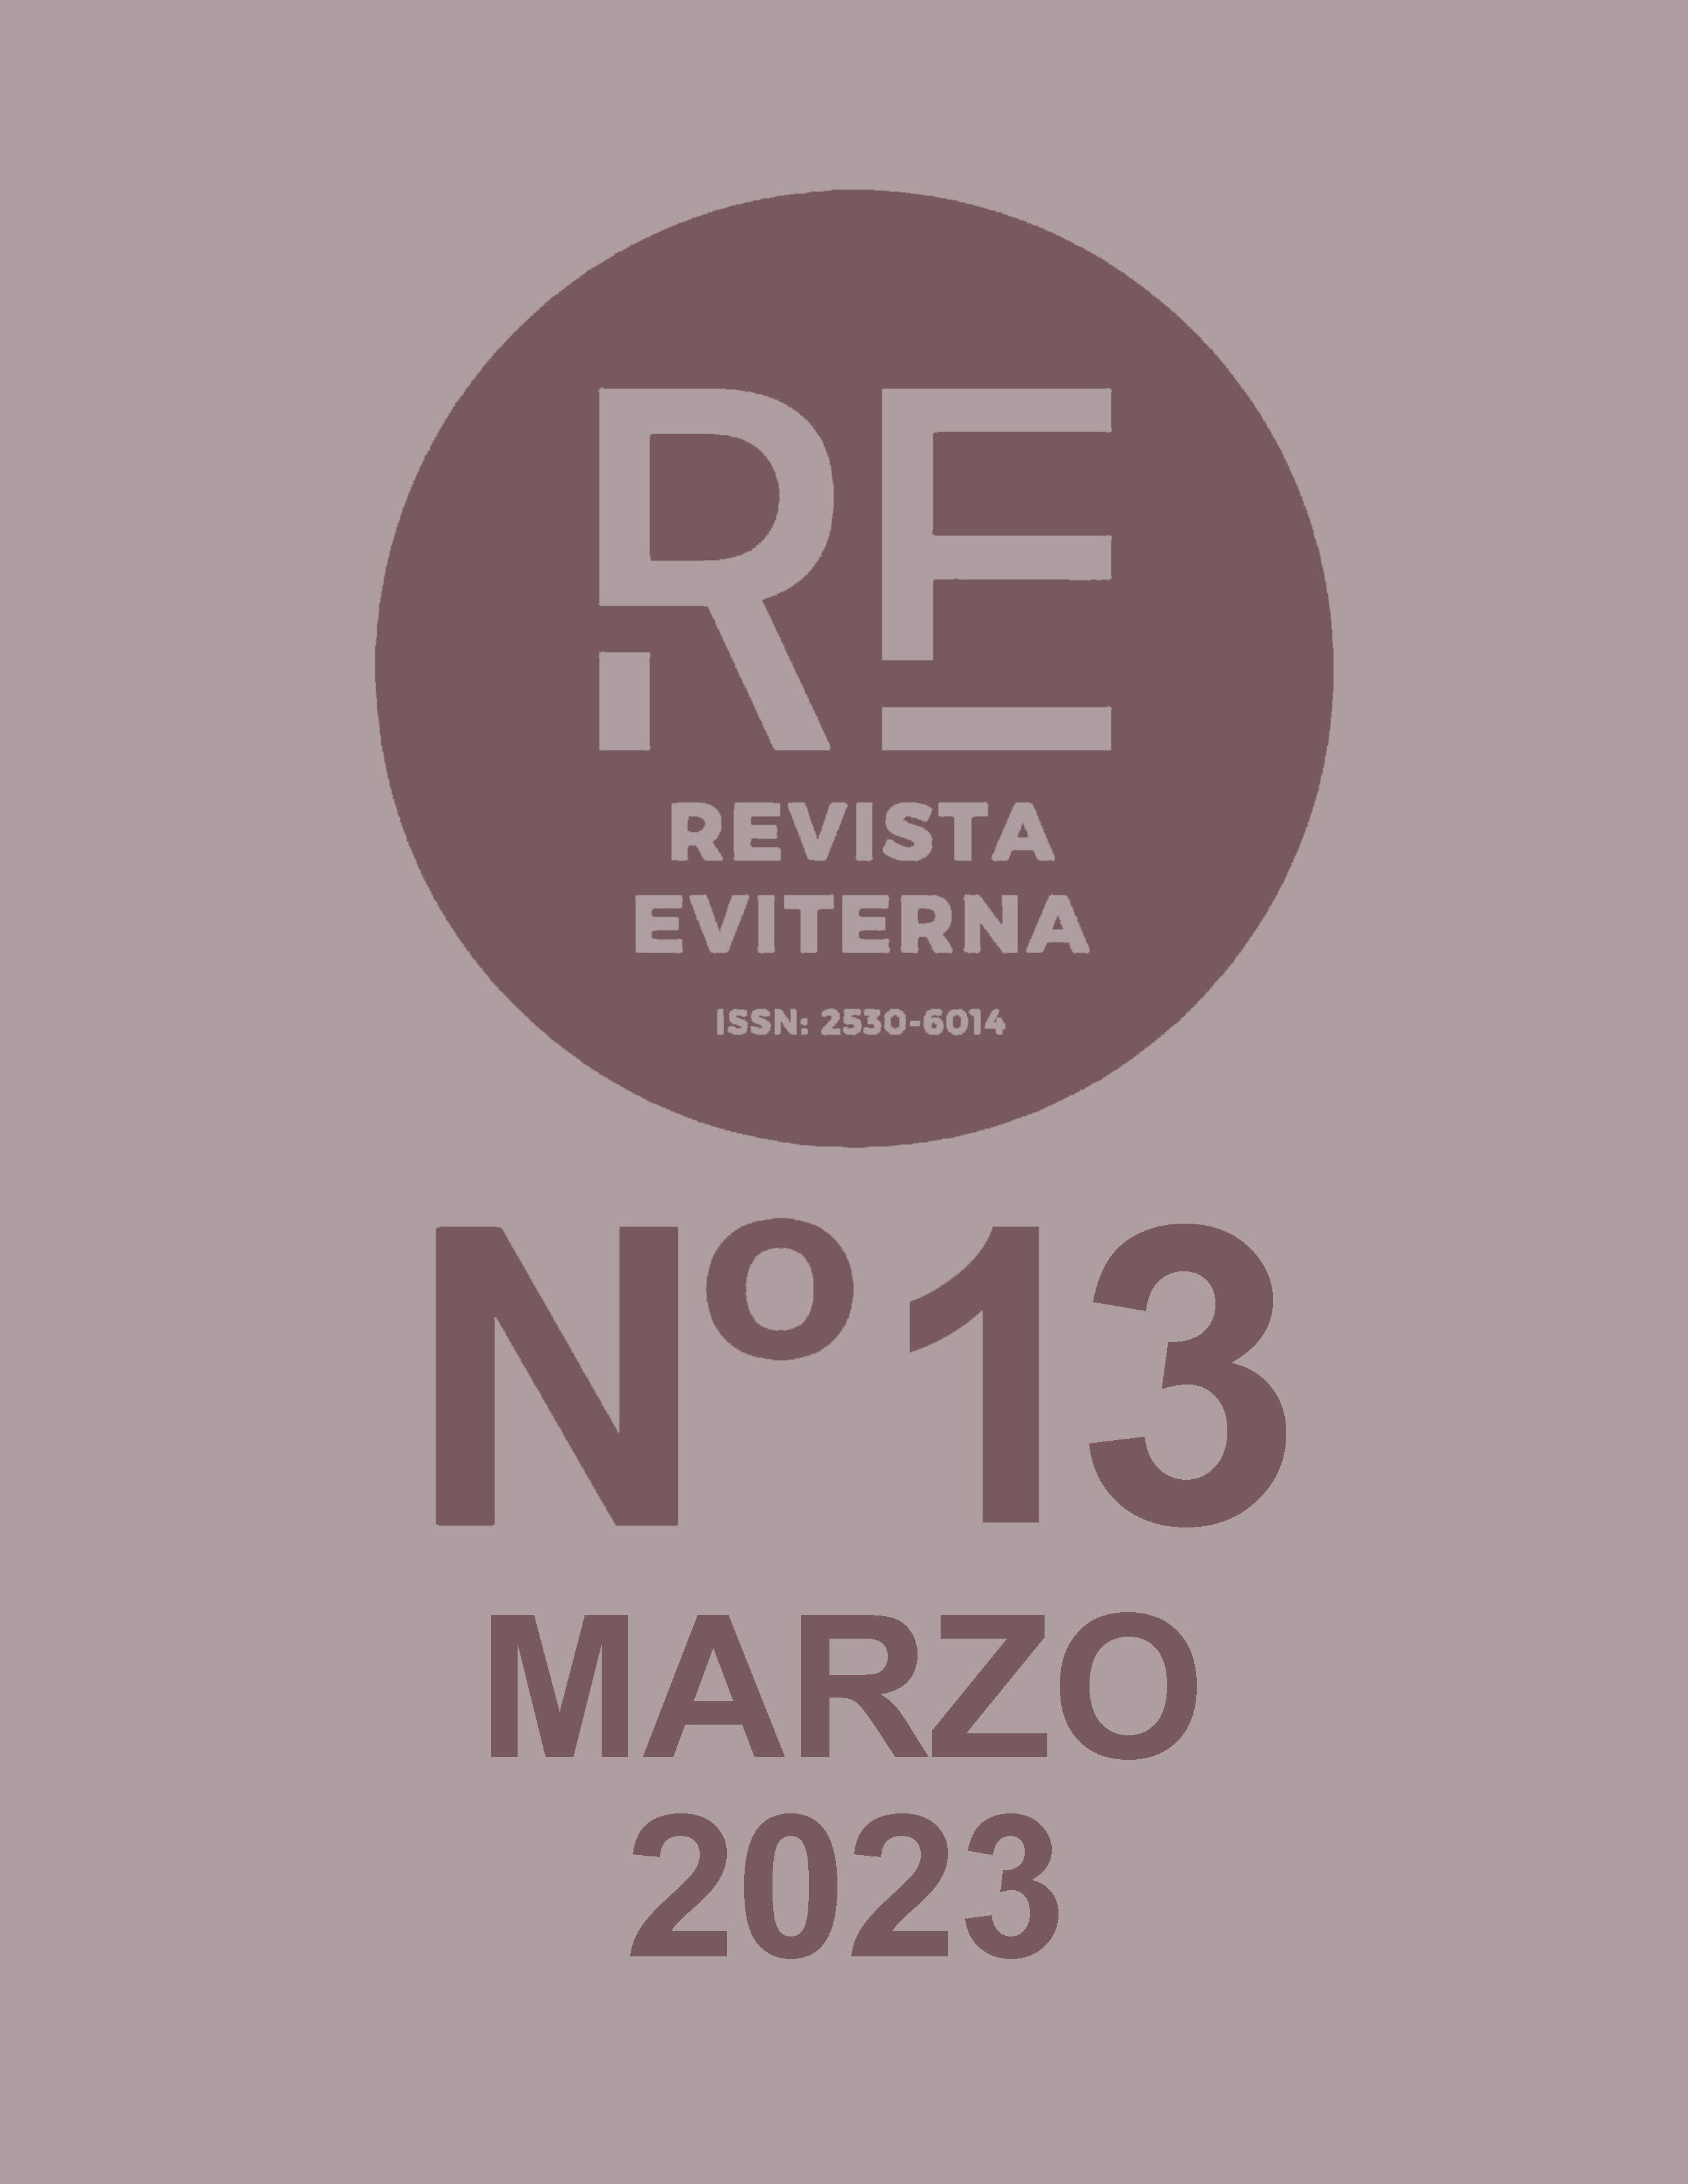 					View No. 13 (2023): Revista Eviterna nº 13, march 2023
				